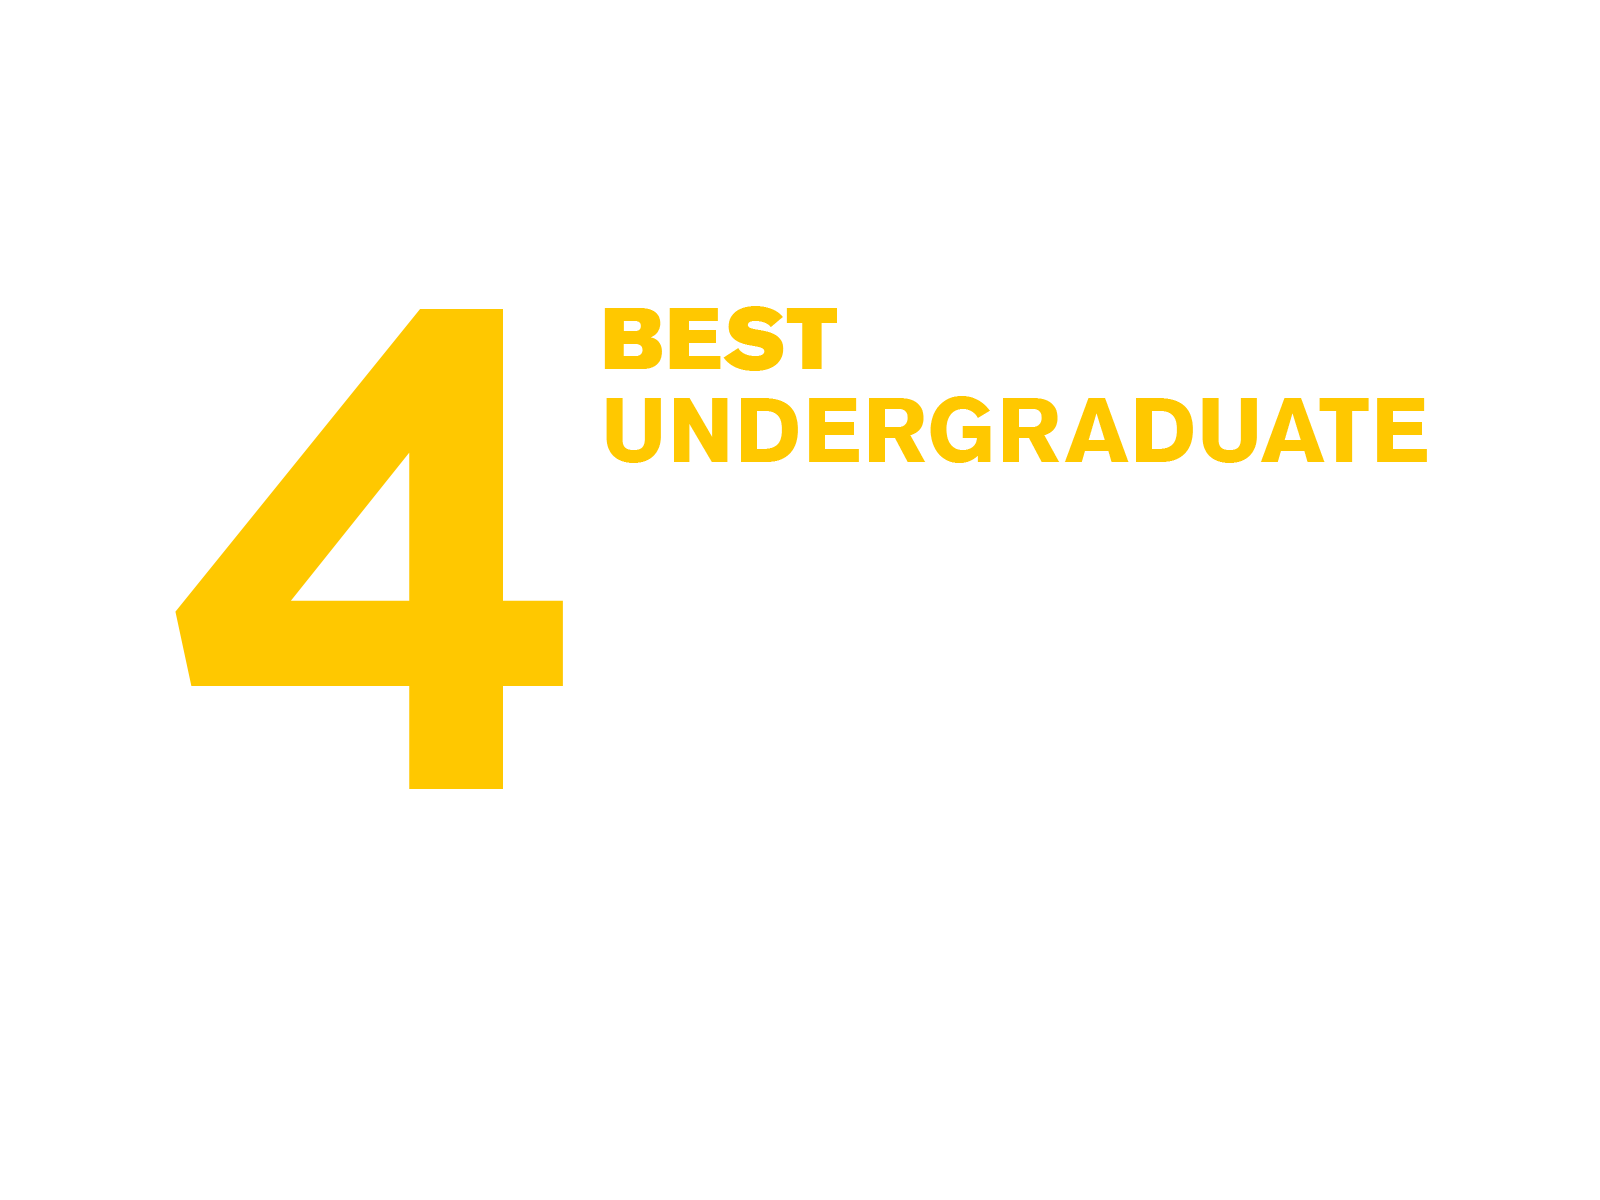 #4 - Best Undergraduate Aerospace Engineering, Daytona Beach Campus